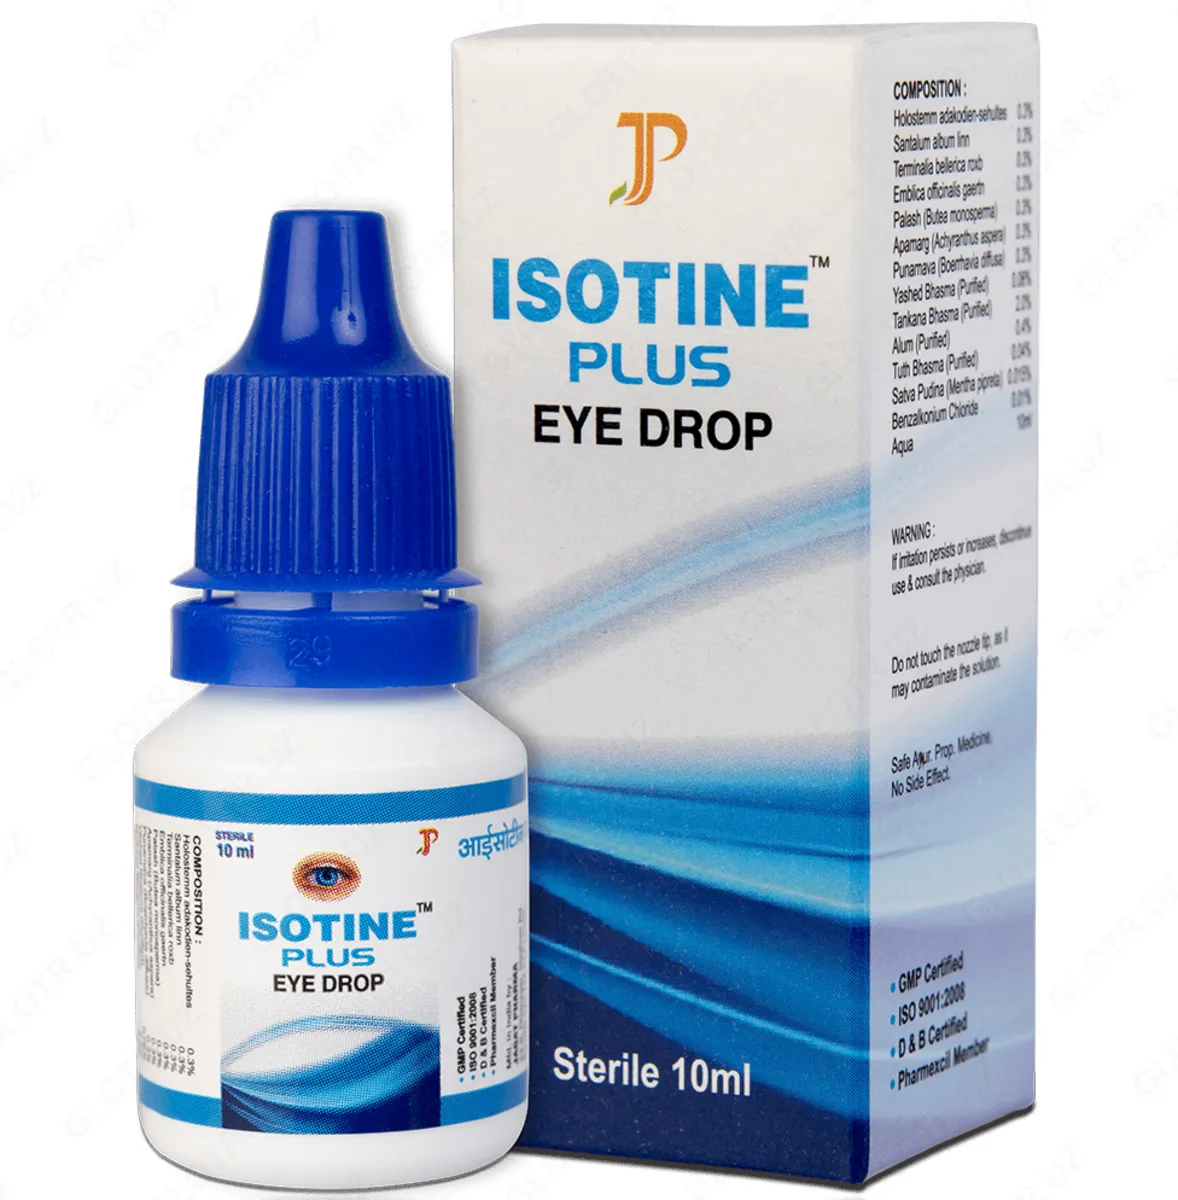 Isotine Plus-Ko'z tomchilari#3